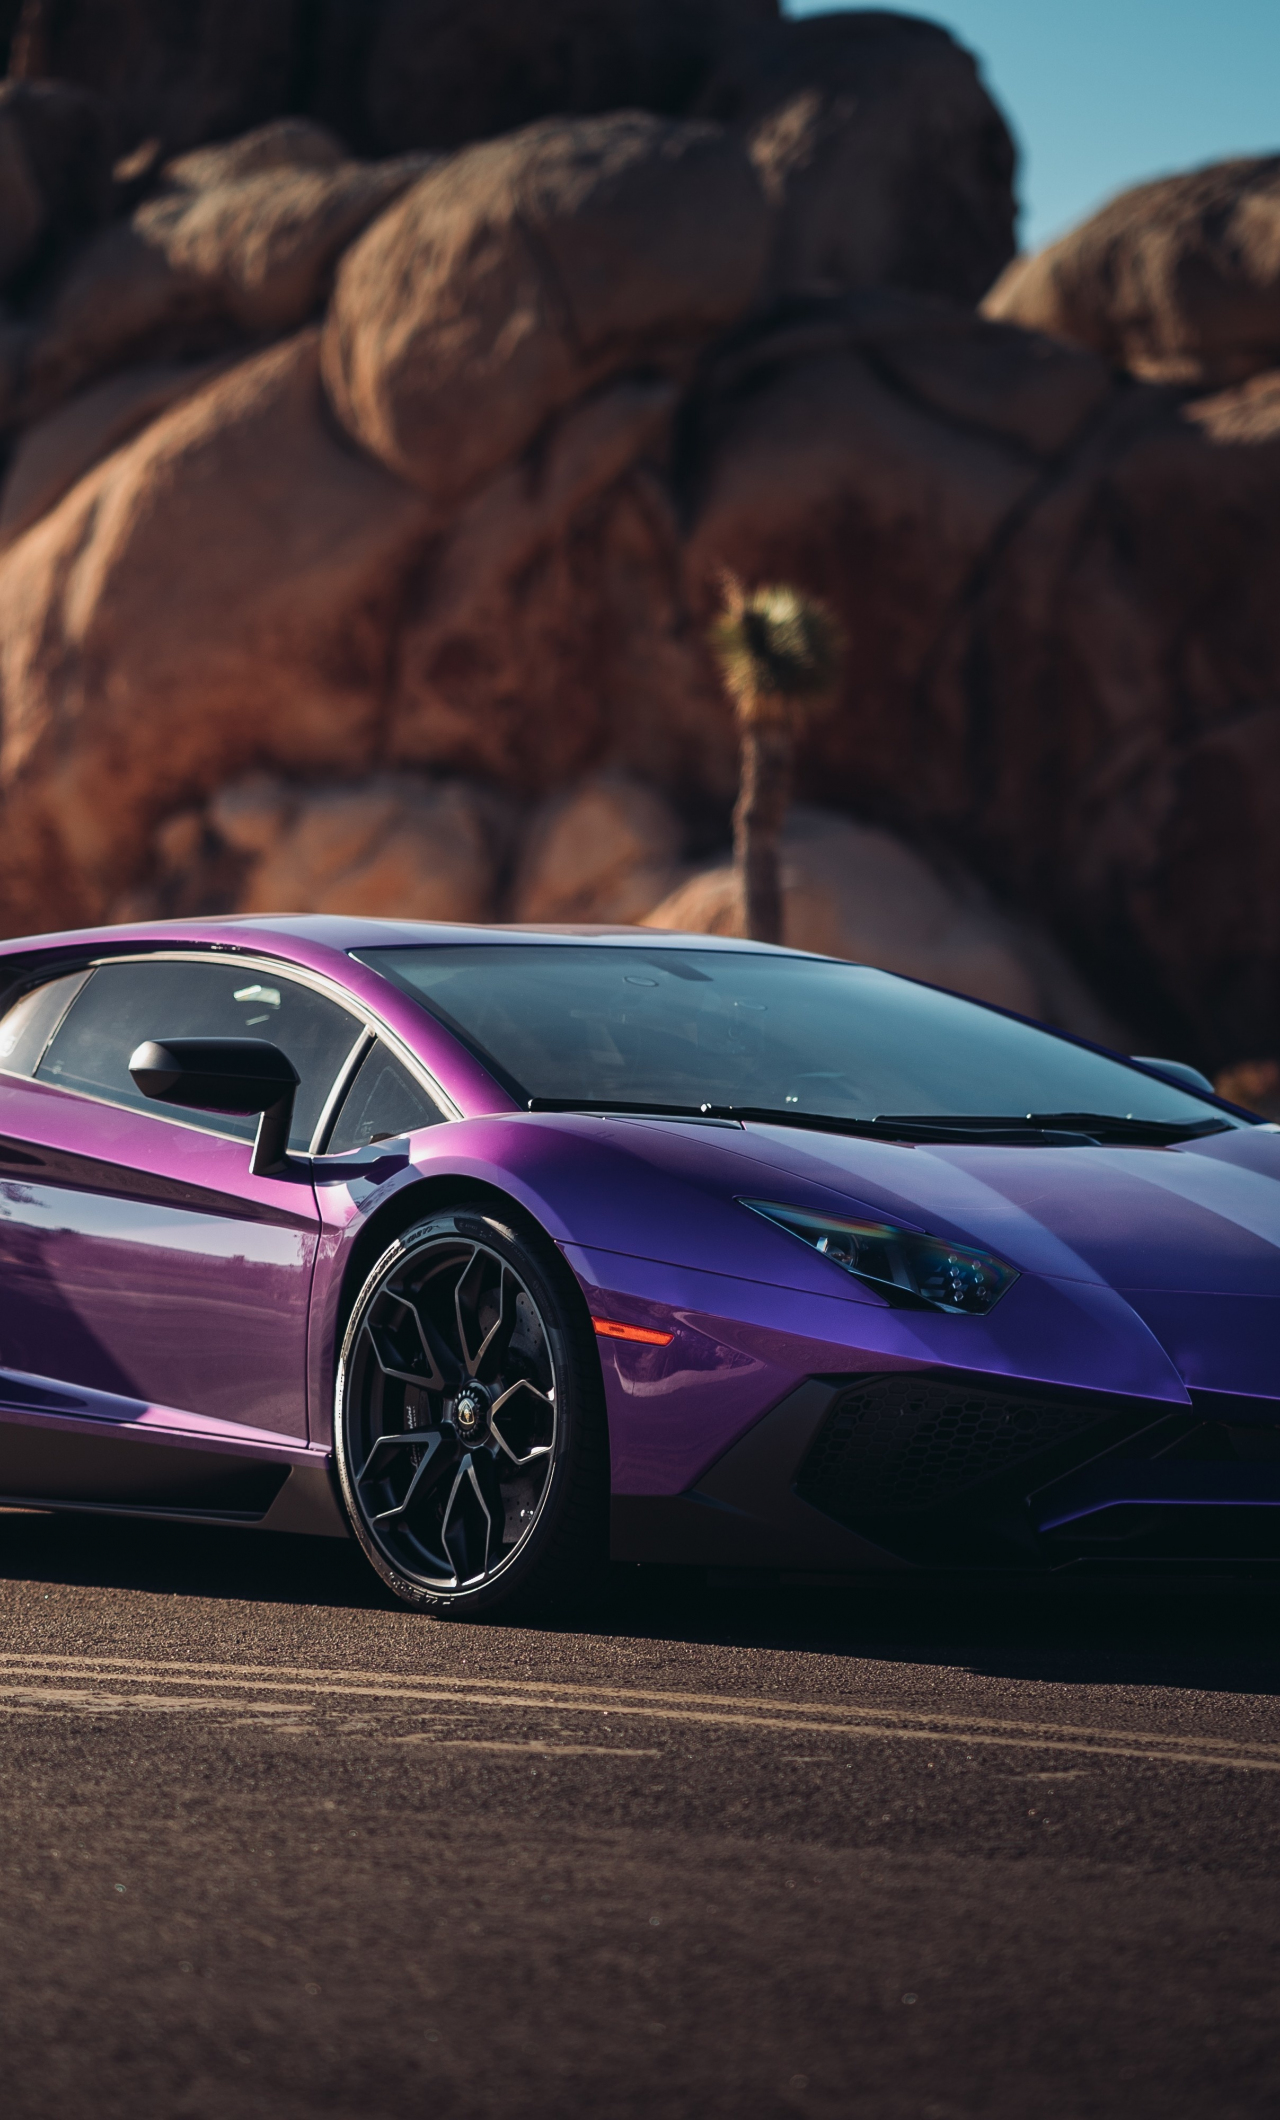 Download lamborghini aventador lp sports car, purple 1280x2120 wallpaper, iphone 6 plus, 1280x2120 HD image, background, 8577